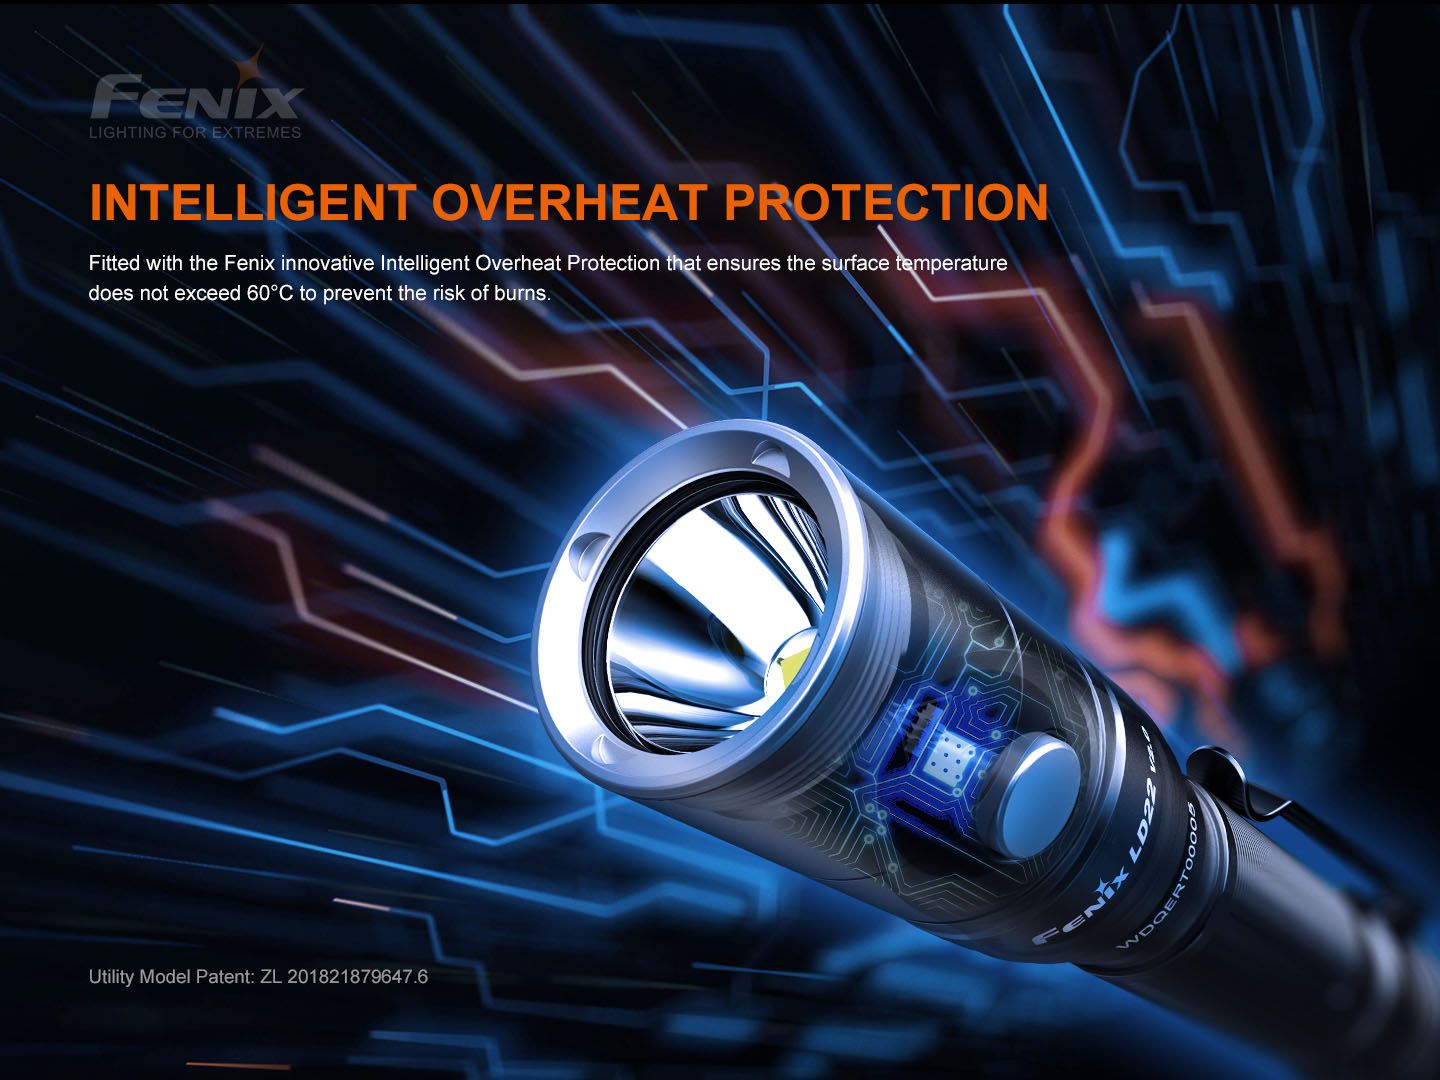 Fenix LD22 Flashlight Flashlights and Lighting Fenix Tactical Gear Supplier Tactical Distributors Australia